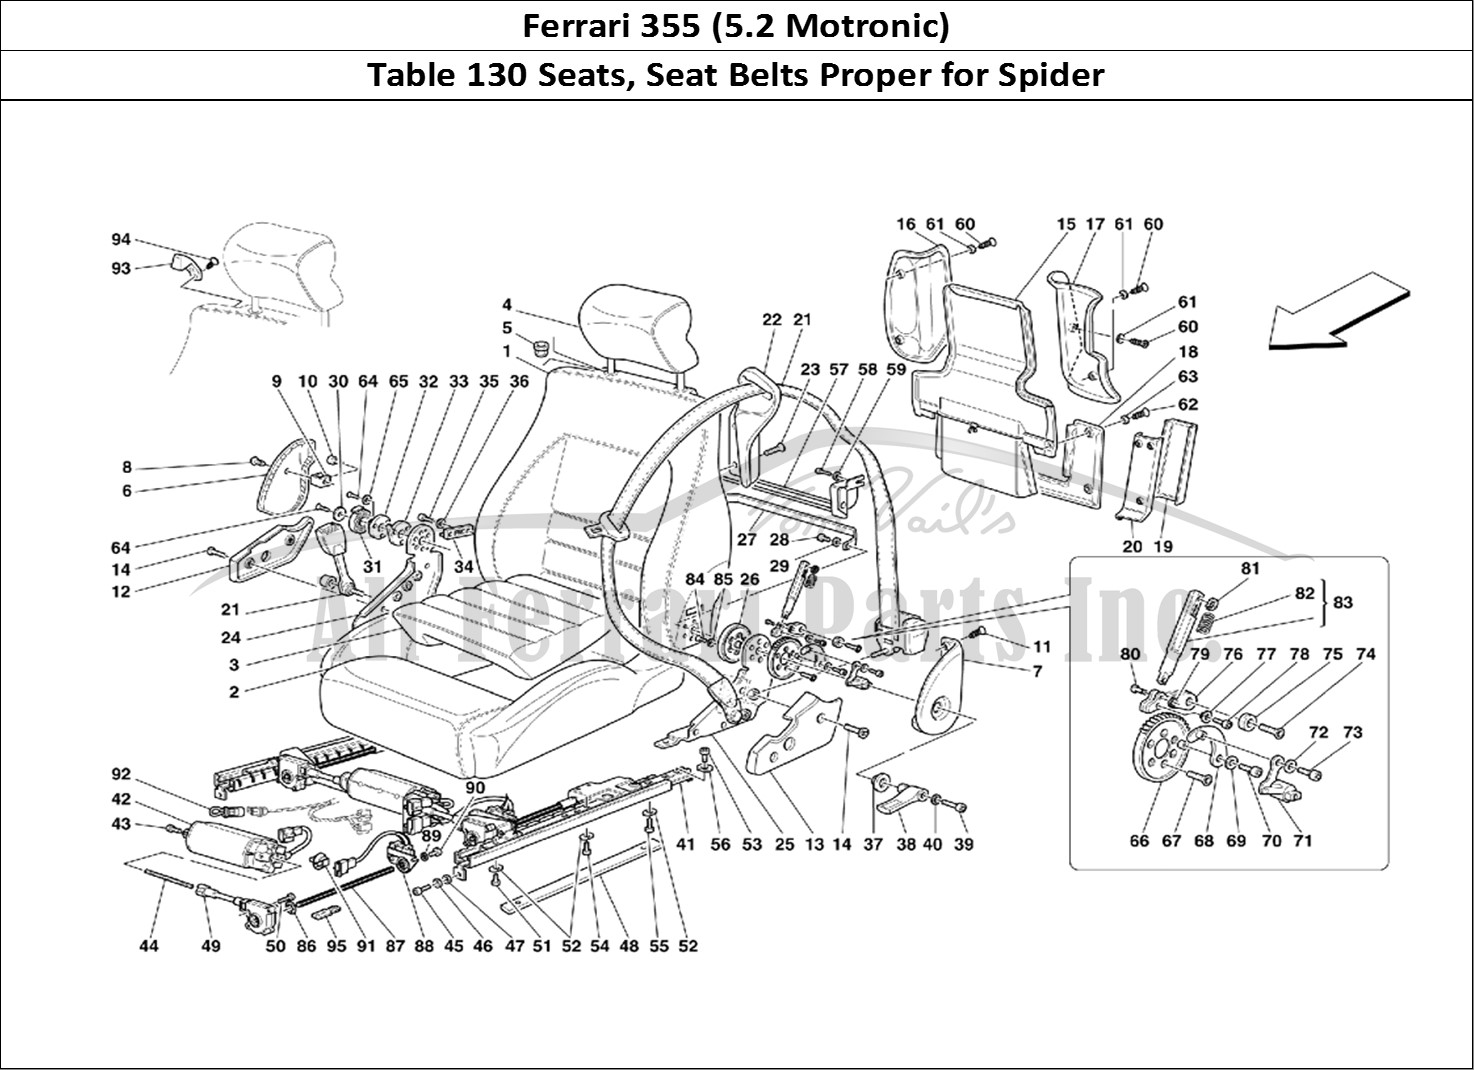 Ferrari Parts Ferrari 355 (5.2 Motronic) Page 130 Seats and Safety Belts -V